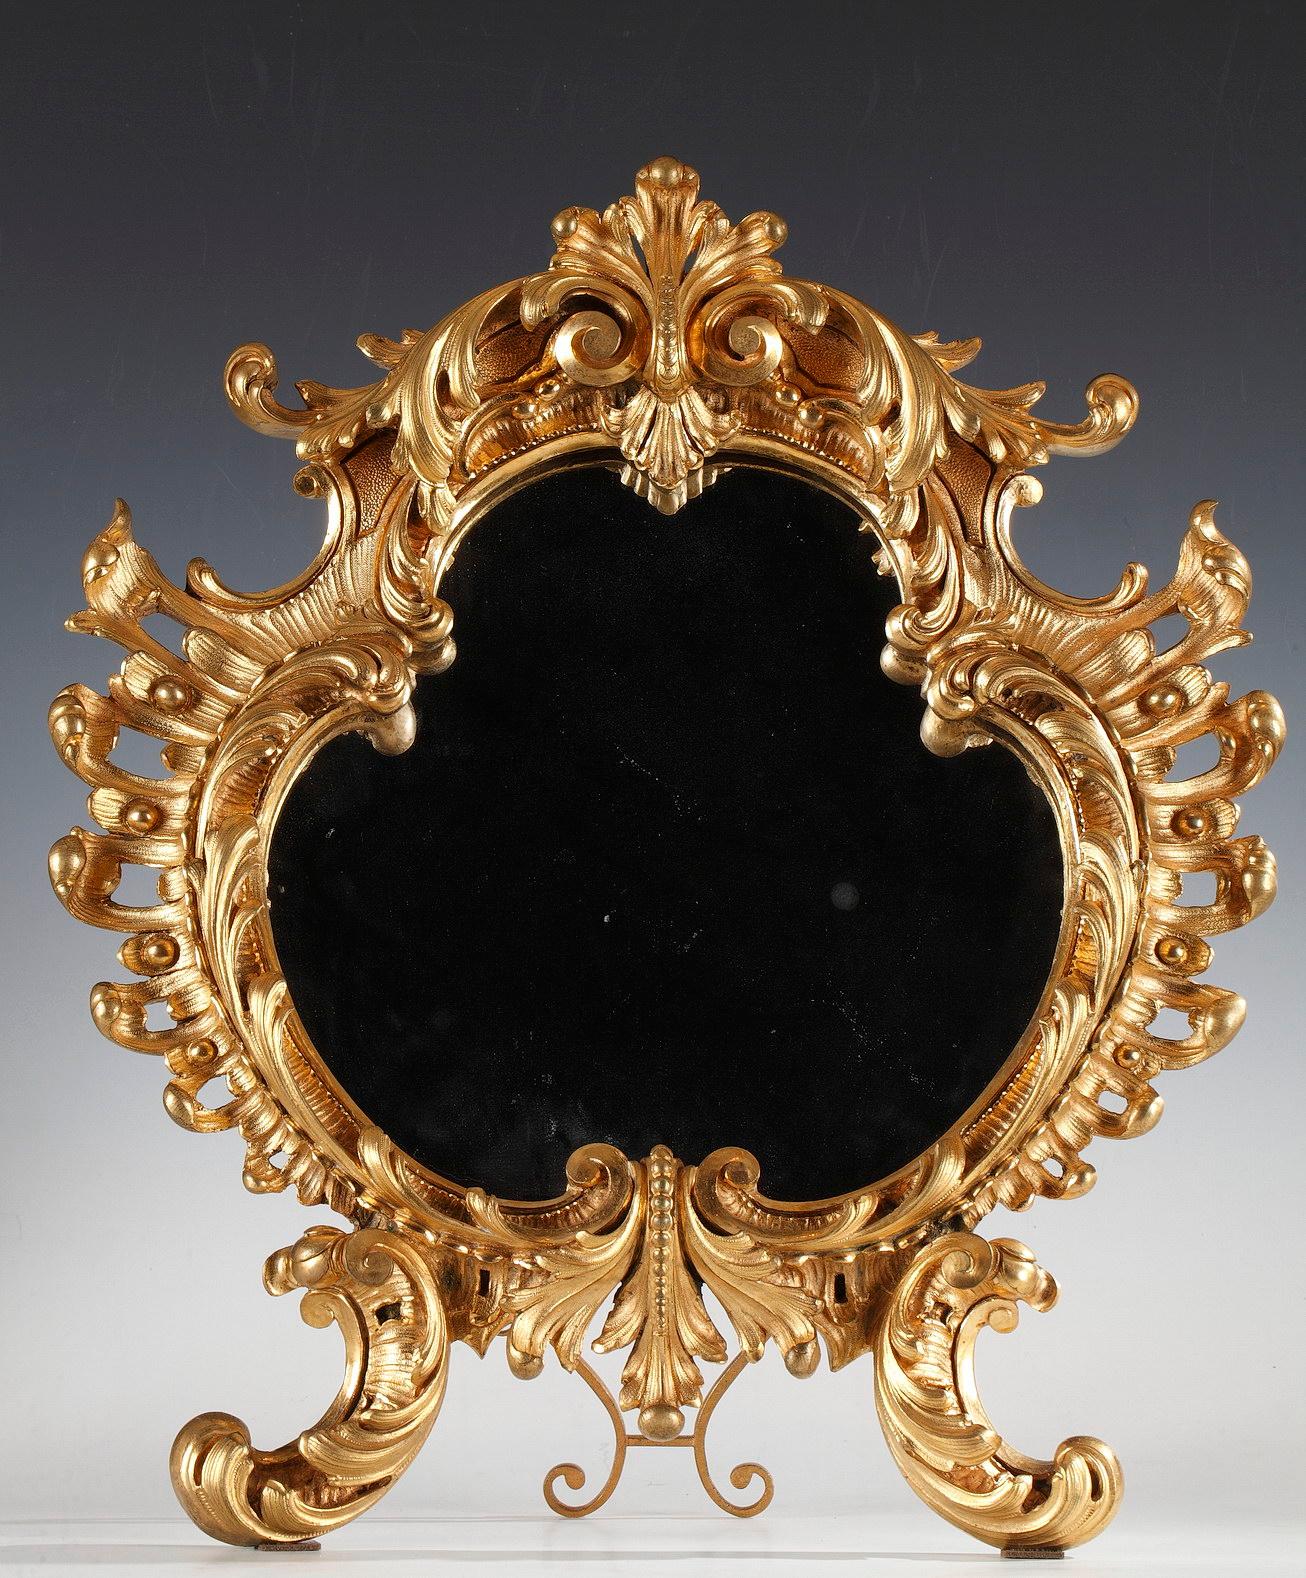 Main mirror: Height : 49 cm (19.3 in.) ; width : 43 cm (16.9 in.) ; depth : 6 cm (2.3 in.)
Small mirrors: Height : 40 cm (15.7 in.) ; width : 34 cm (13.4 in.) ; depth : 4 cm (1.6 in.)

Elegant set of three mirros, probably Venetian, in gilded bronze